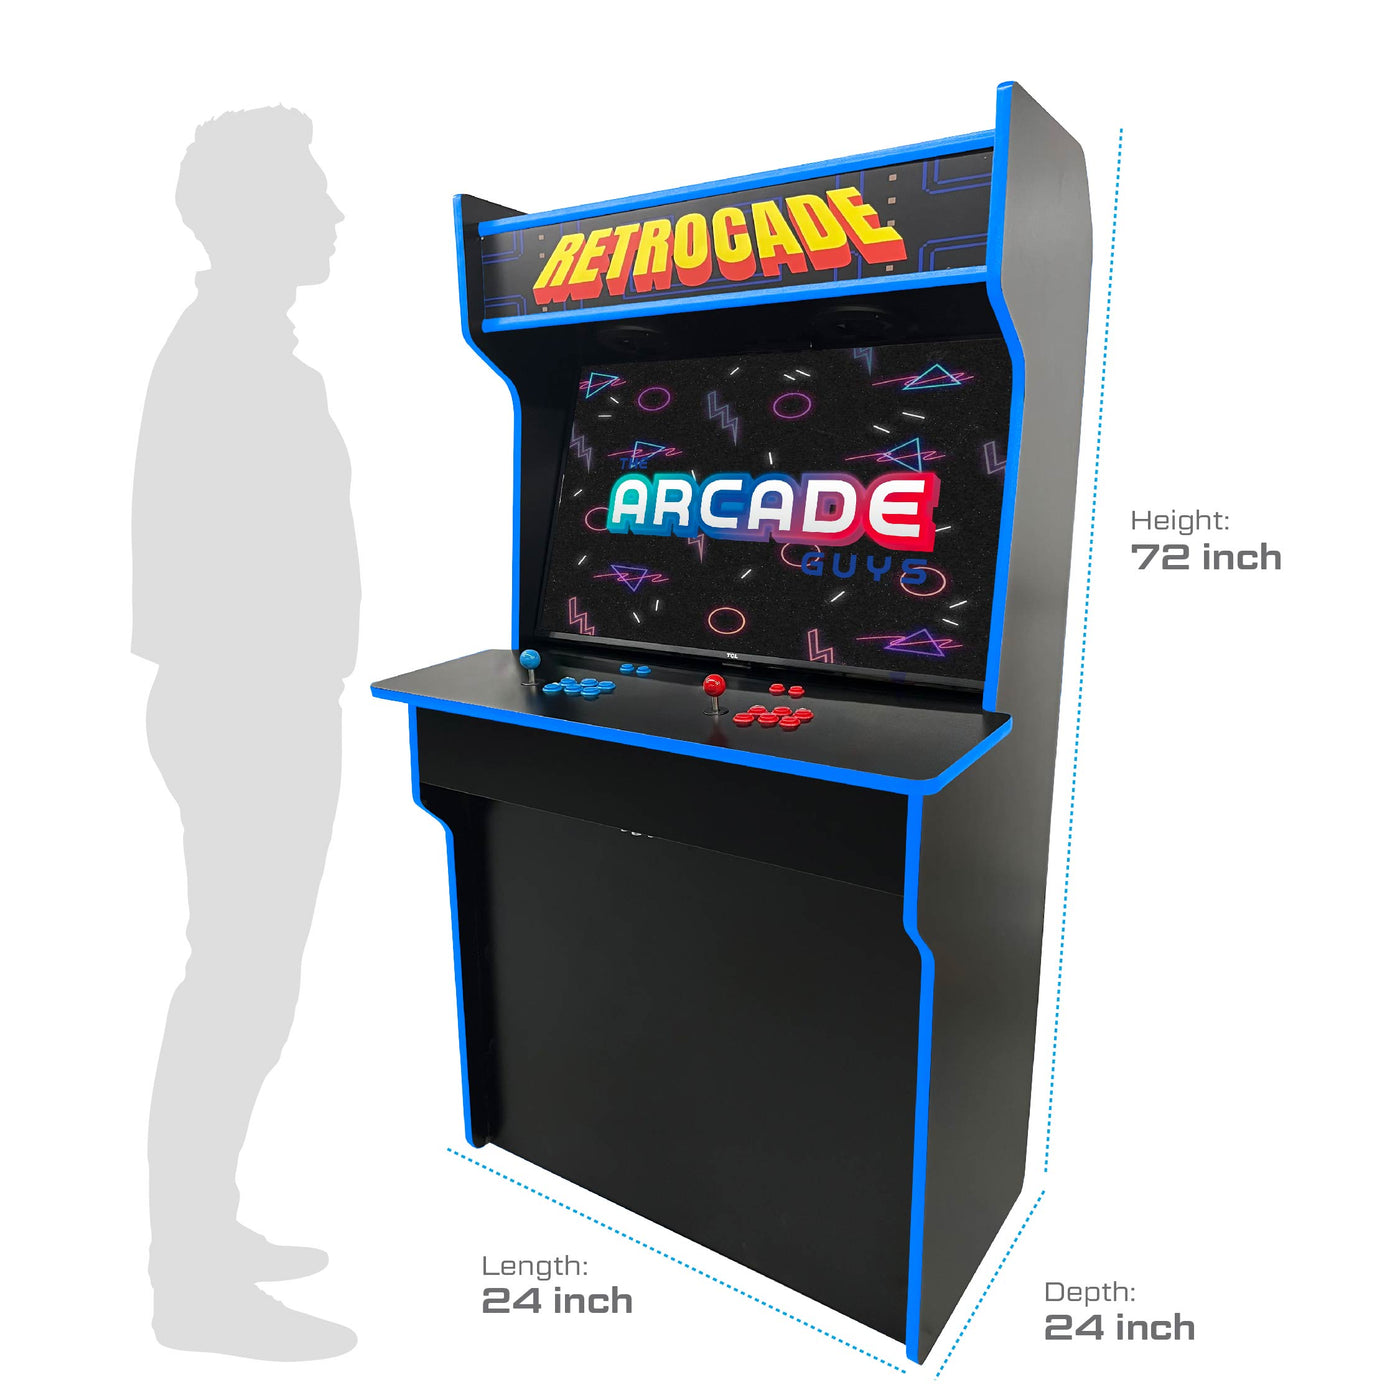 43" 2 player set retro arcade machine measures